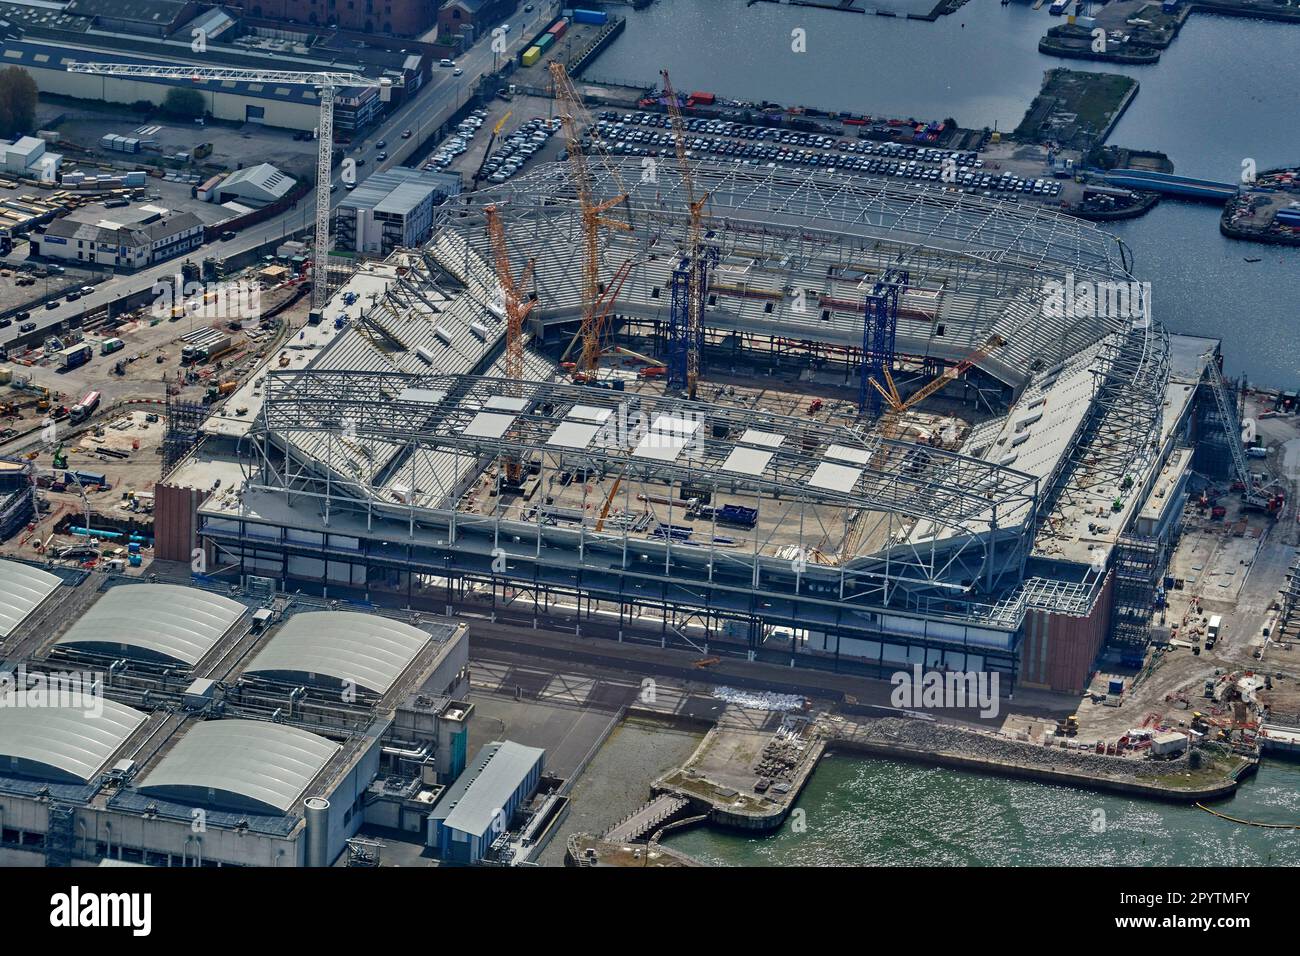 Il nuovo stadio Everton FC in costruzione, a Bramley-Moore Dock, Mersey Side, Liverpool, Inghilterra nord-occidentale Foto Stock